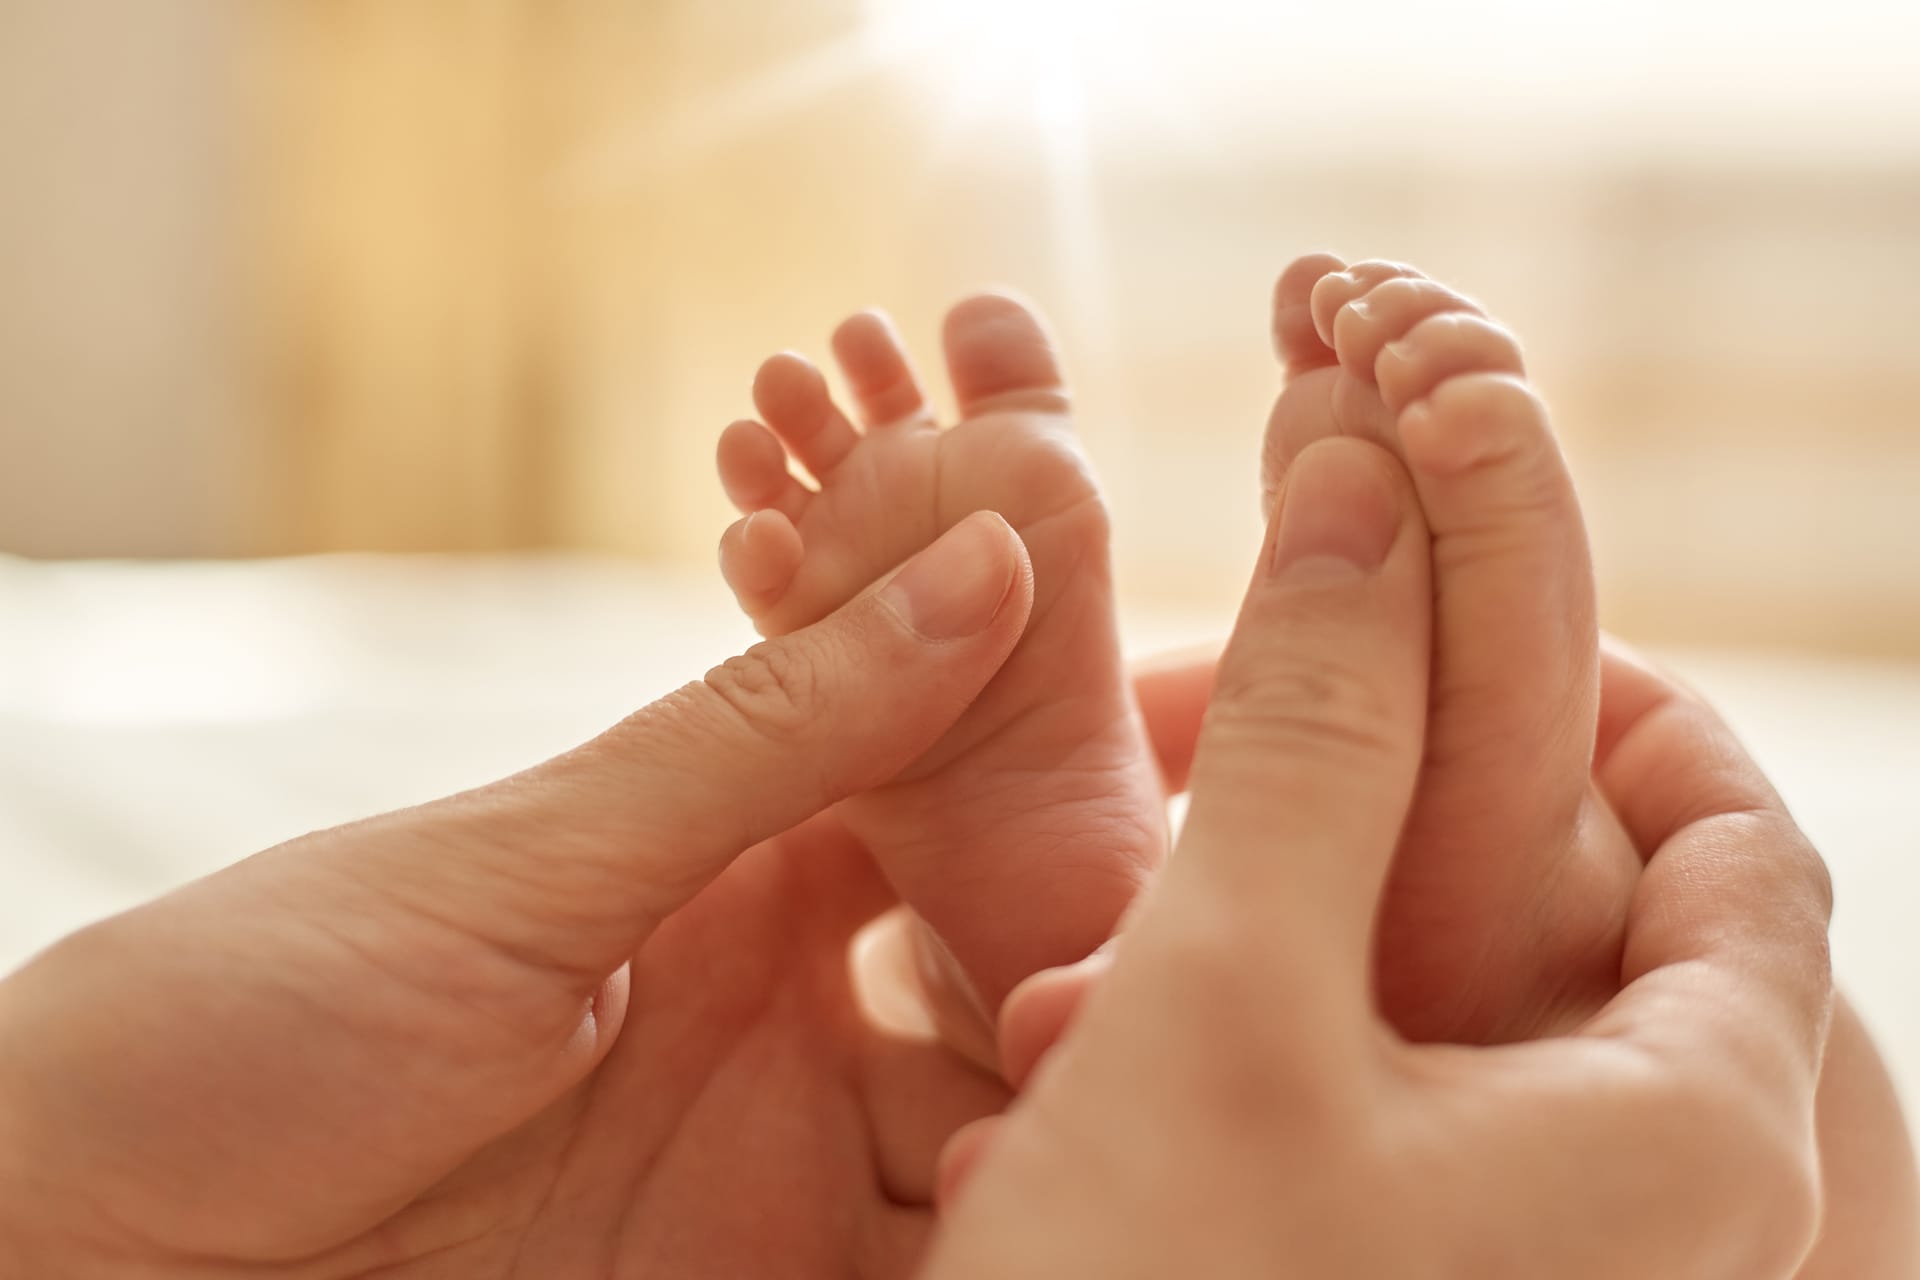 Massage newborn mommy stroking baby s feet with both hands light background